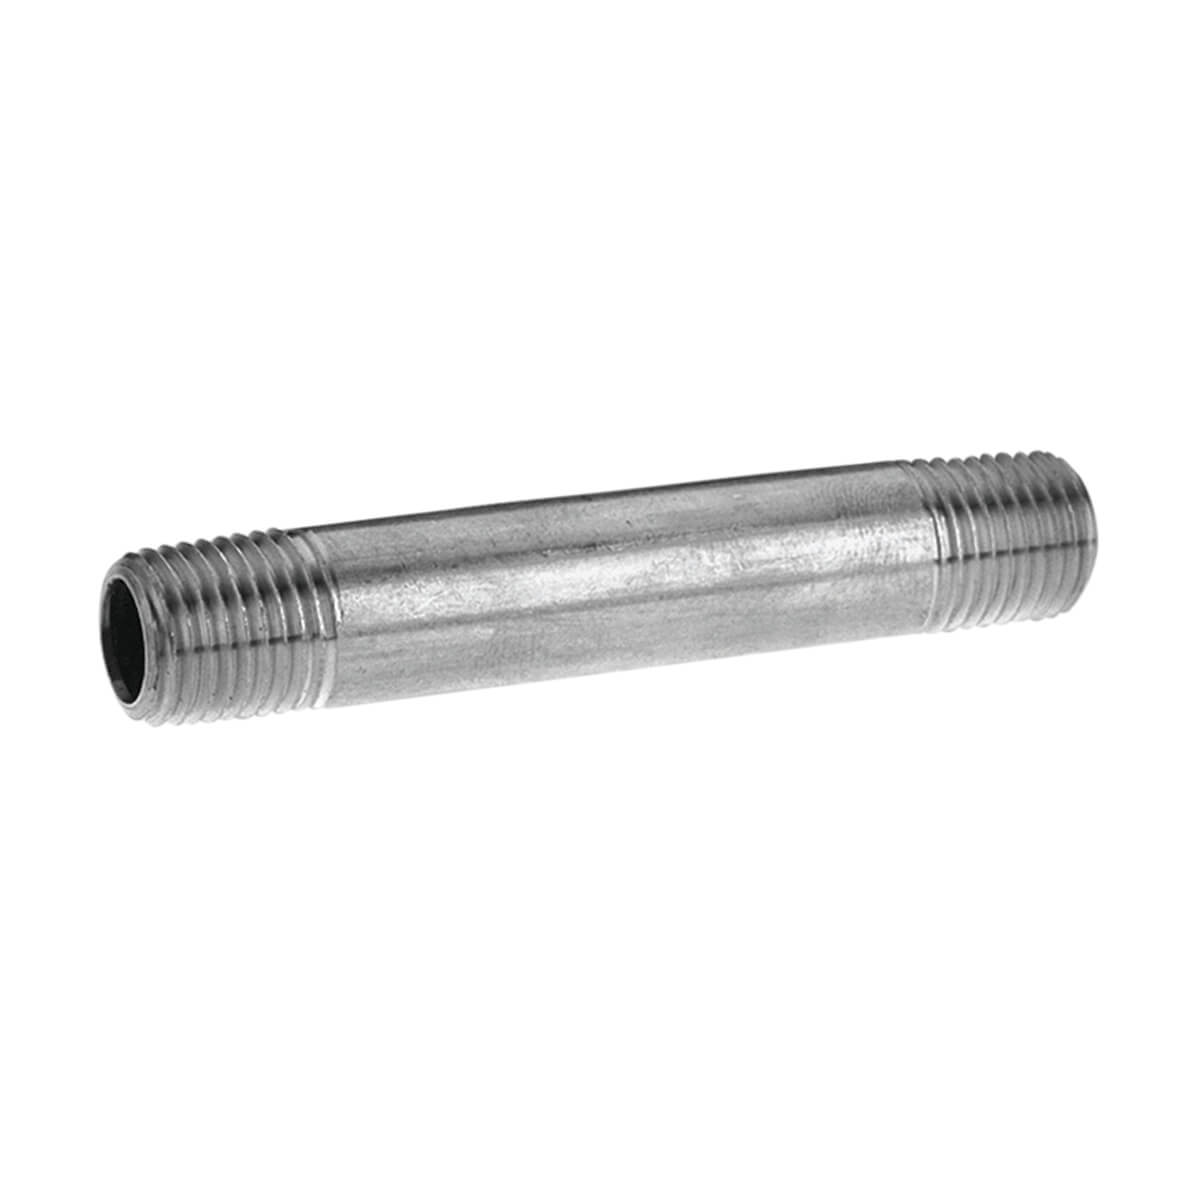 Pipe Nipple Galvanized Steel - 1-1/2-in x CLOSE